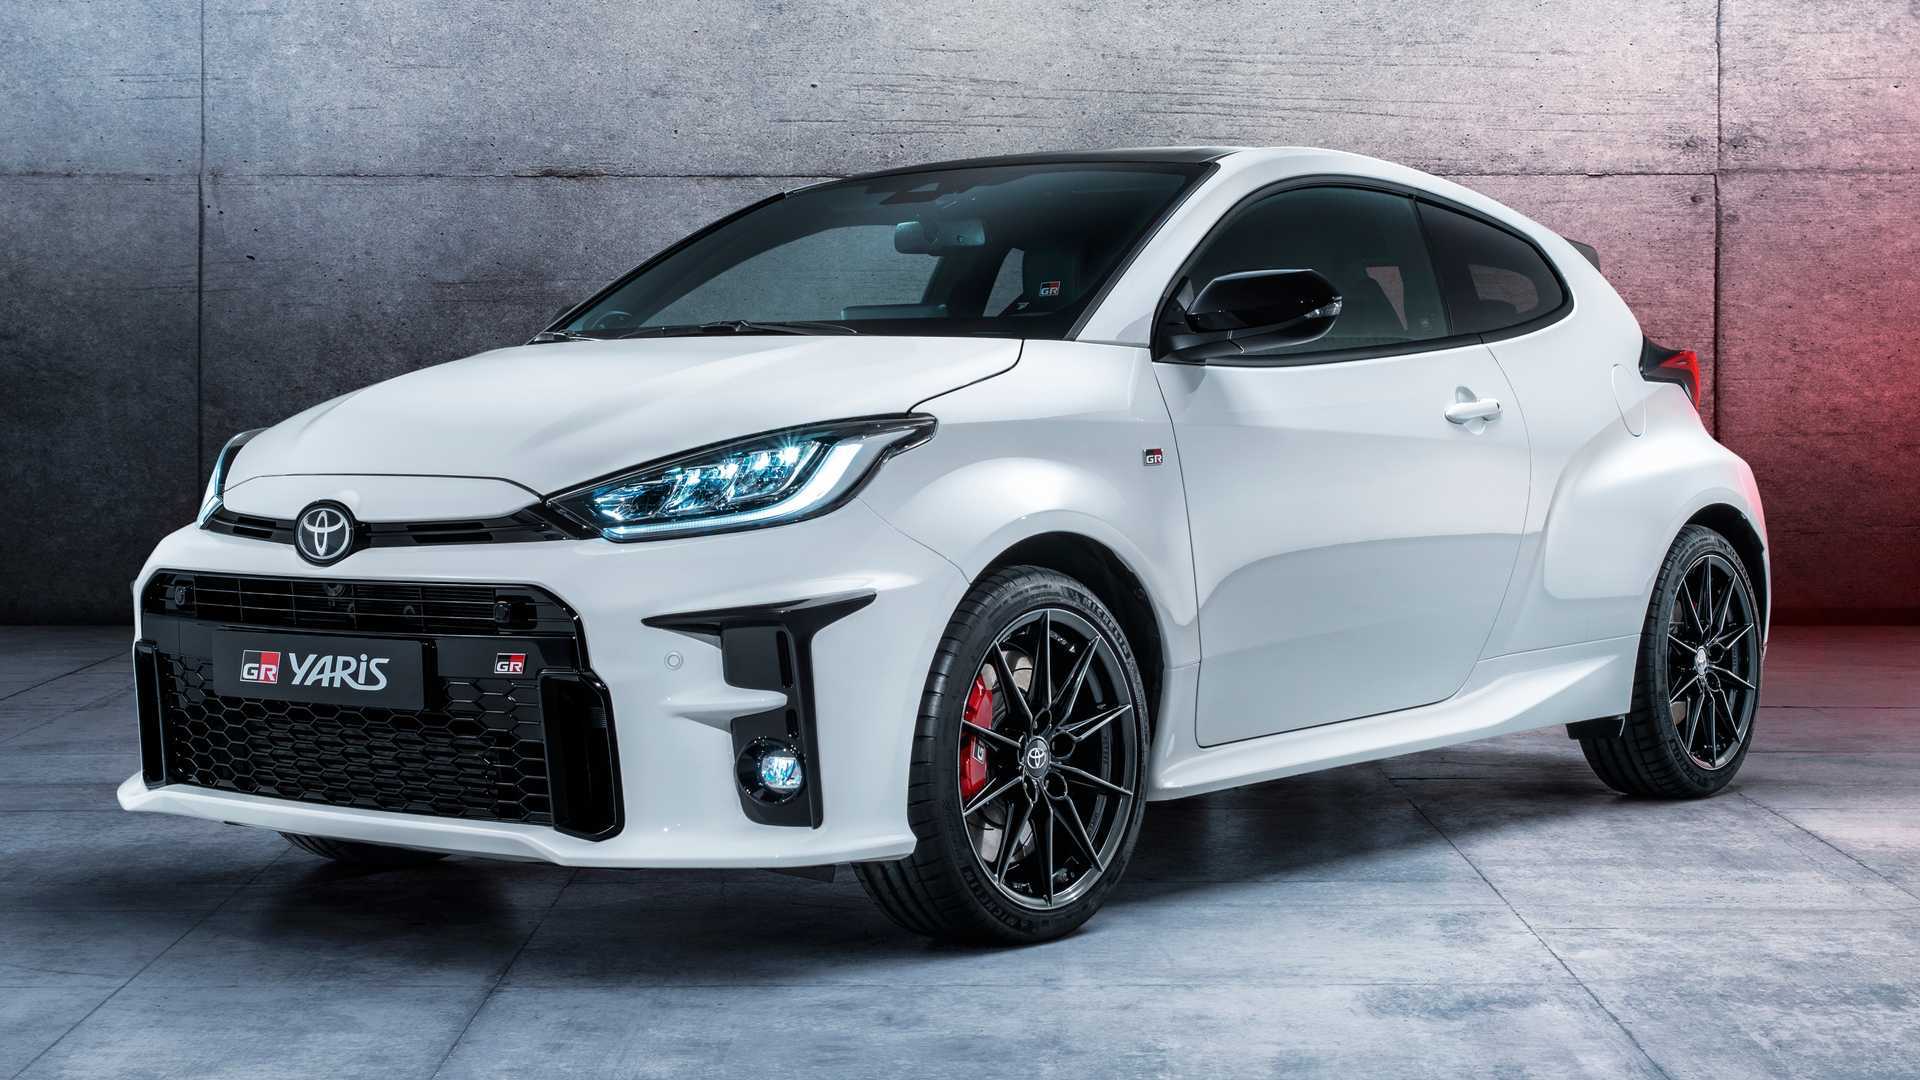 Toyota Yaris GR News and Reviews | Motor1.com